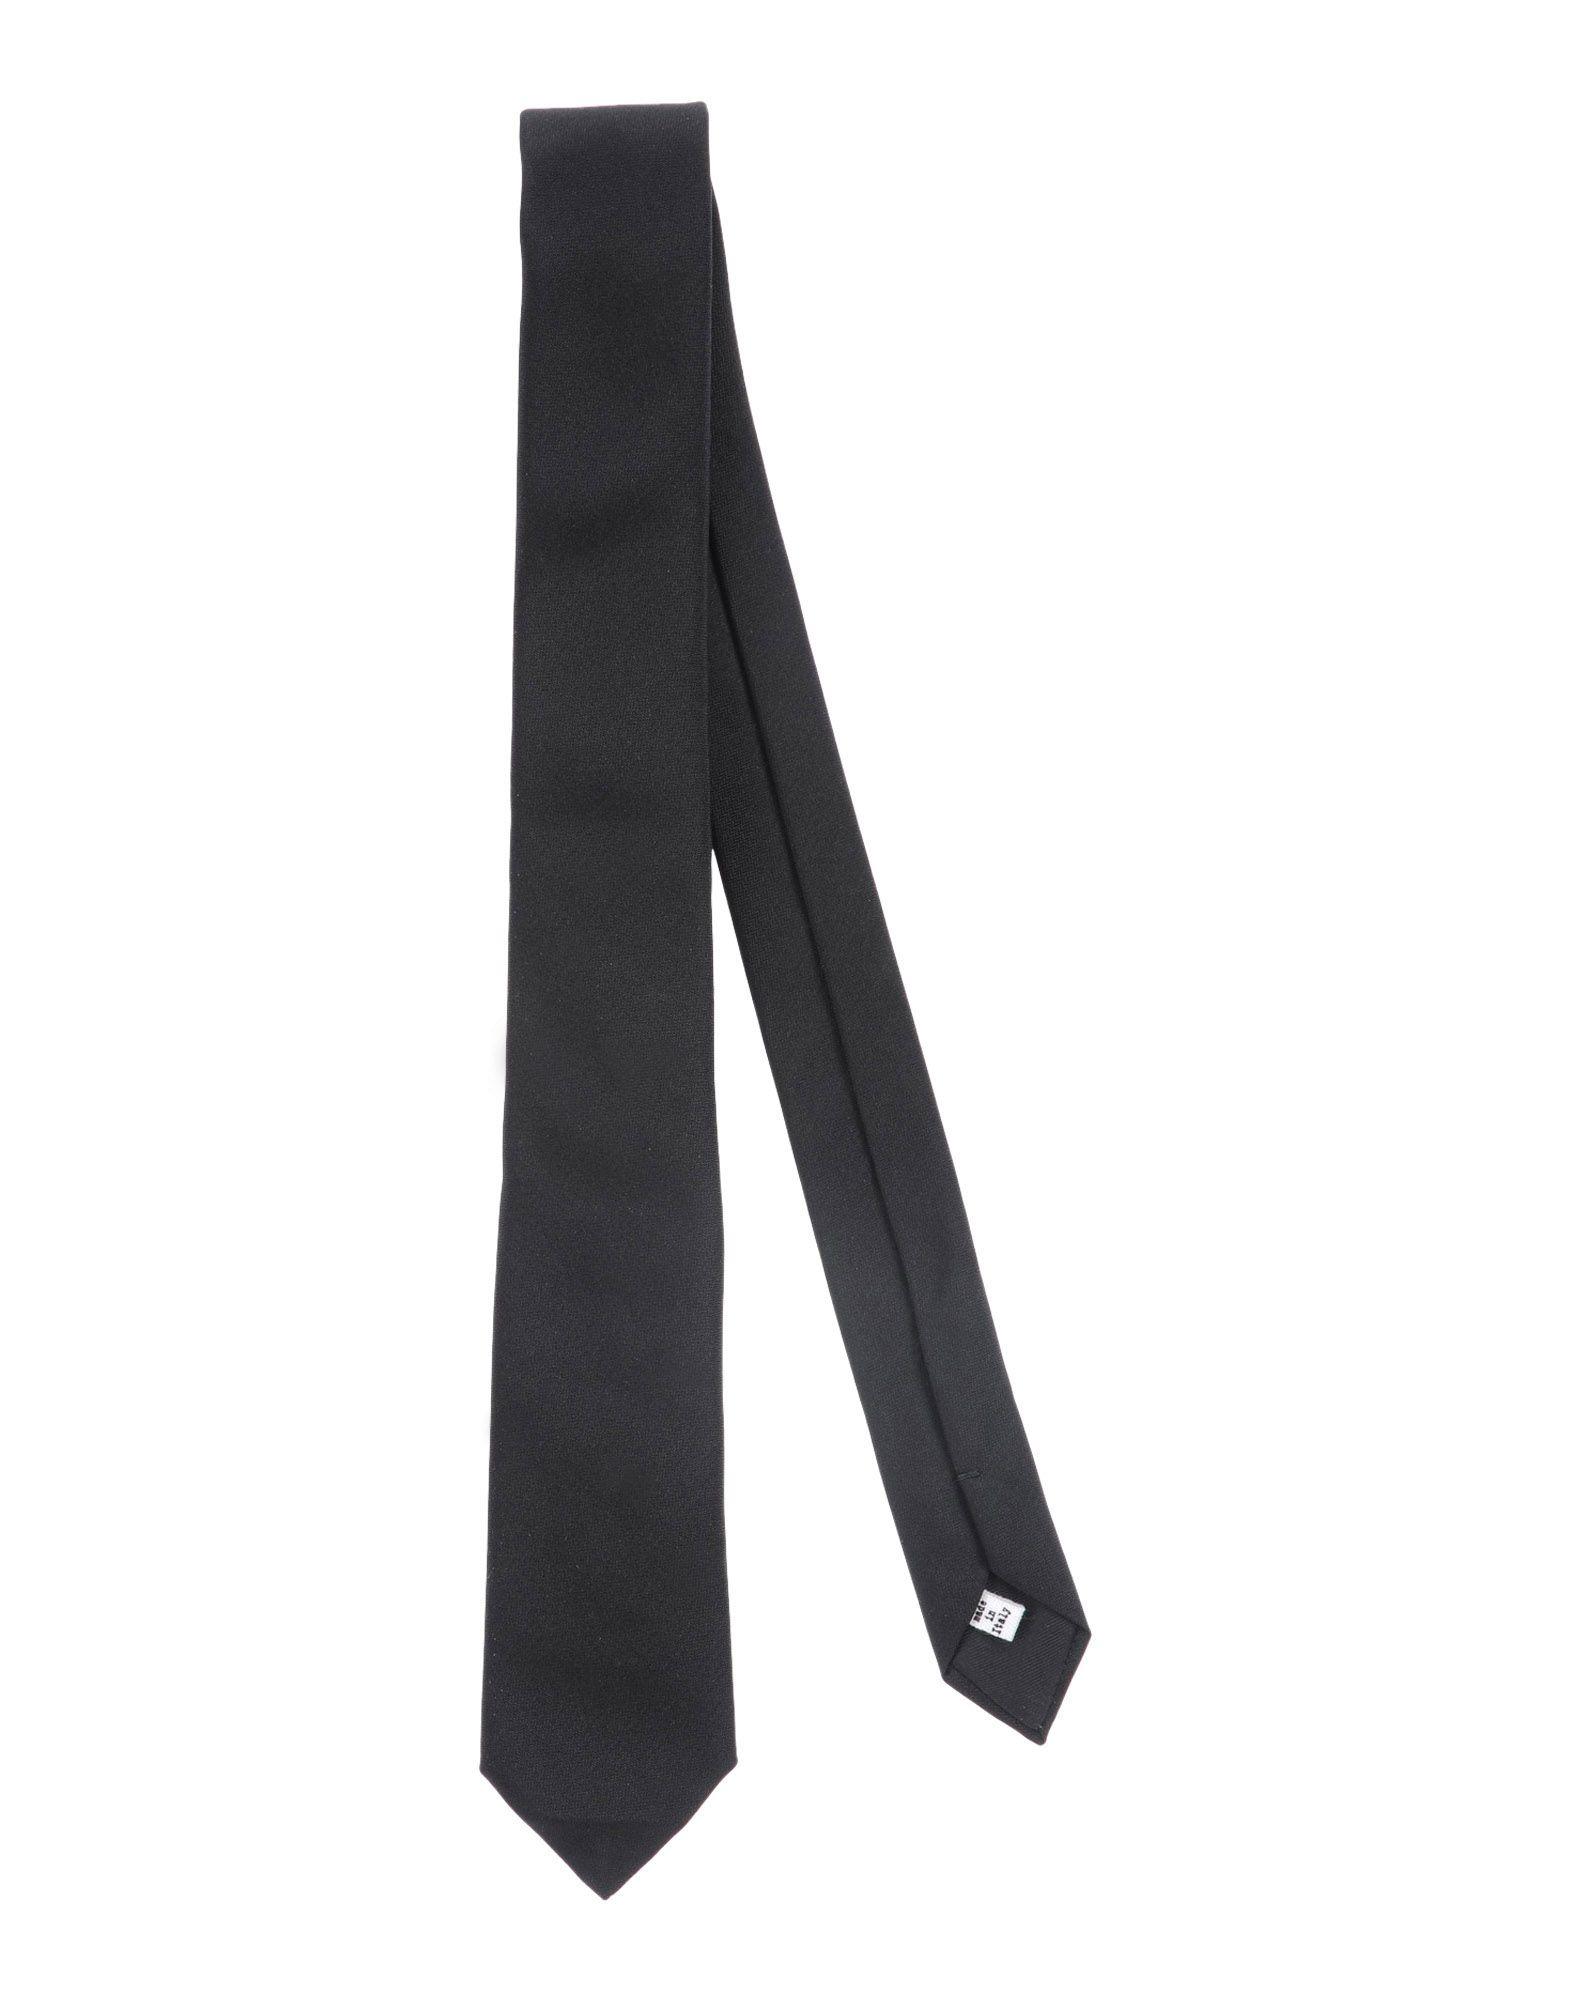 Maison margiela Tie in Black for Men | Lyst